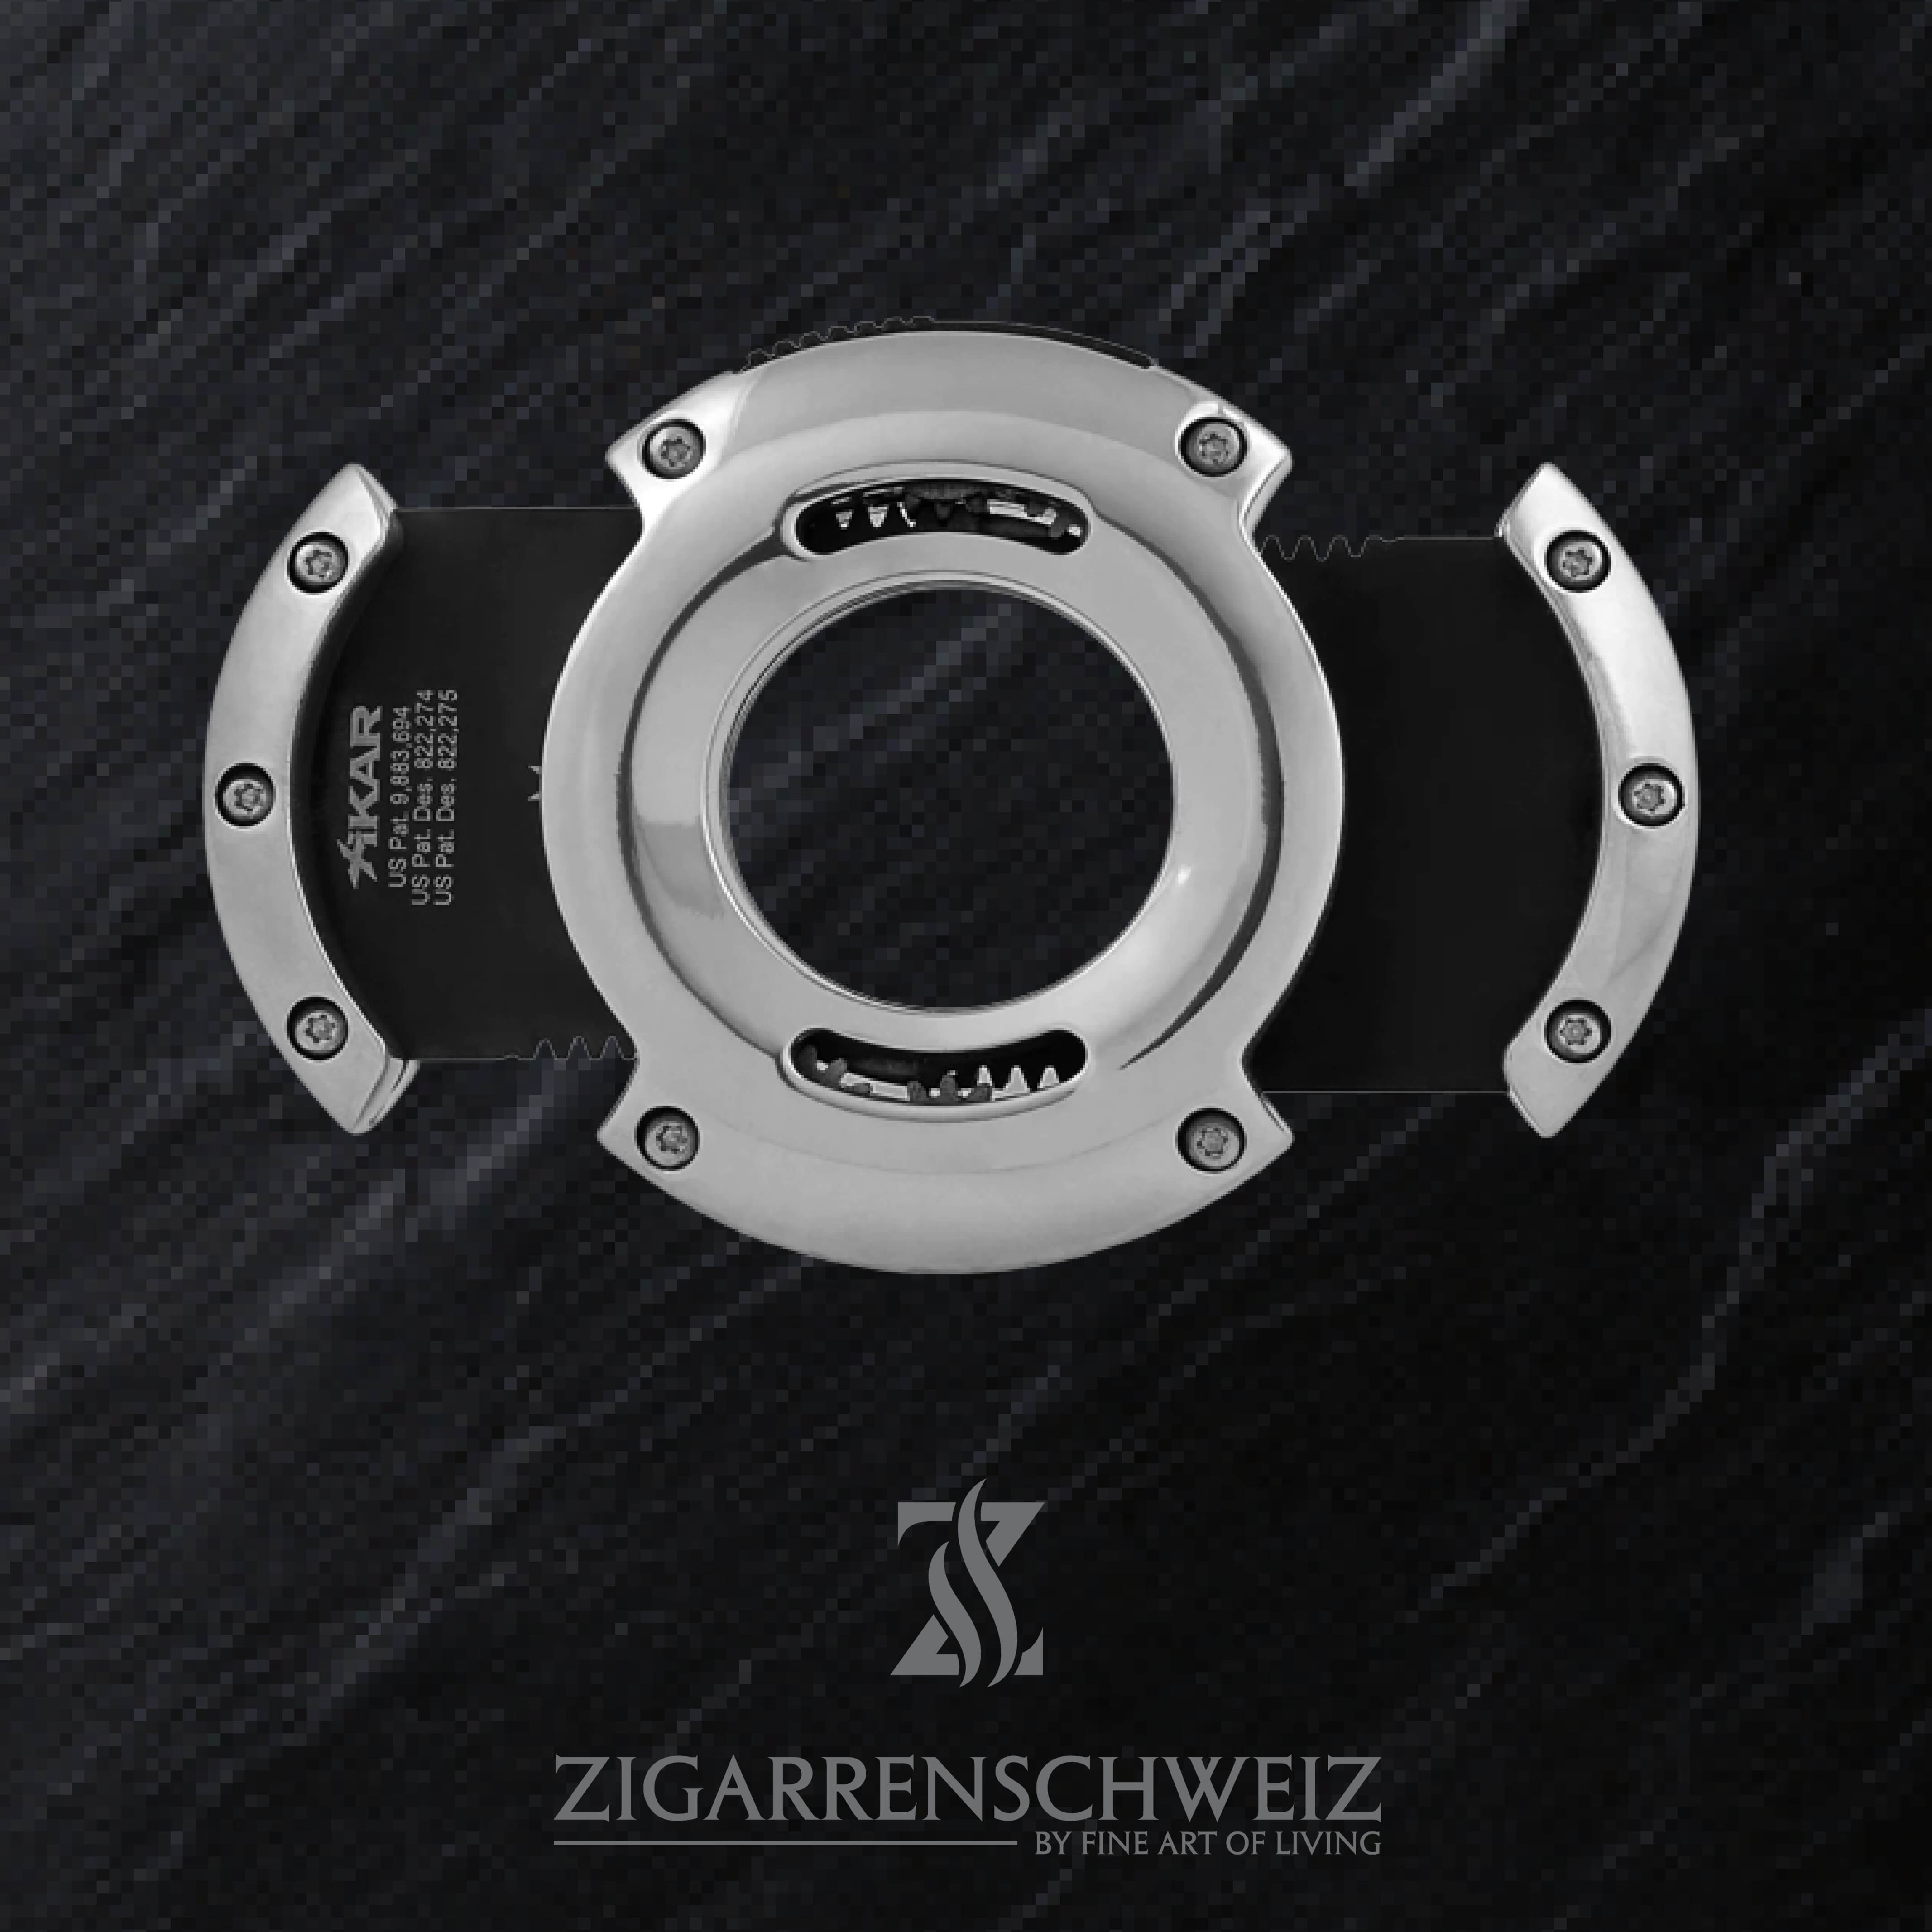 Xikar XO Zigarren Cutter, Farbe Gehäuse: Silber gebürstet, Farbe Klingen: Schwarz, offen